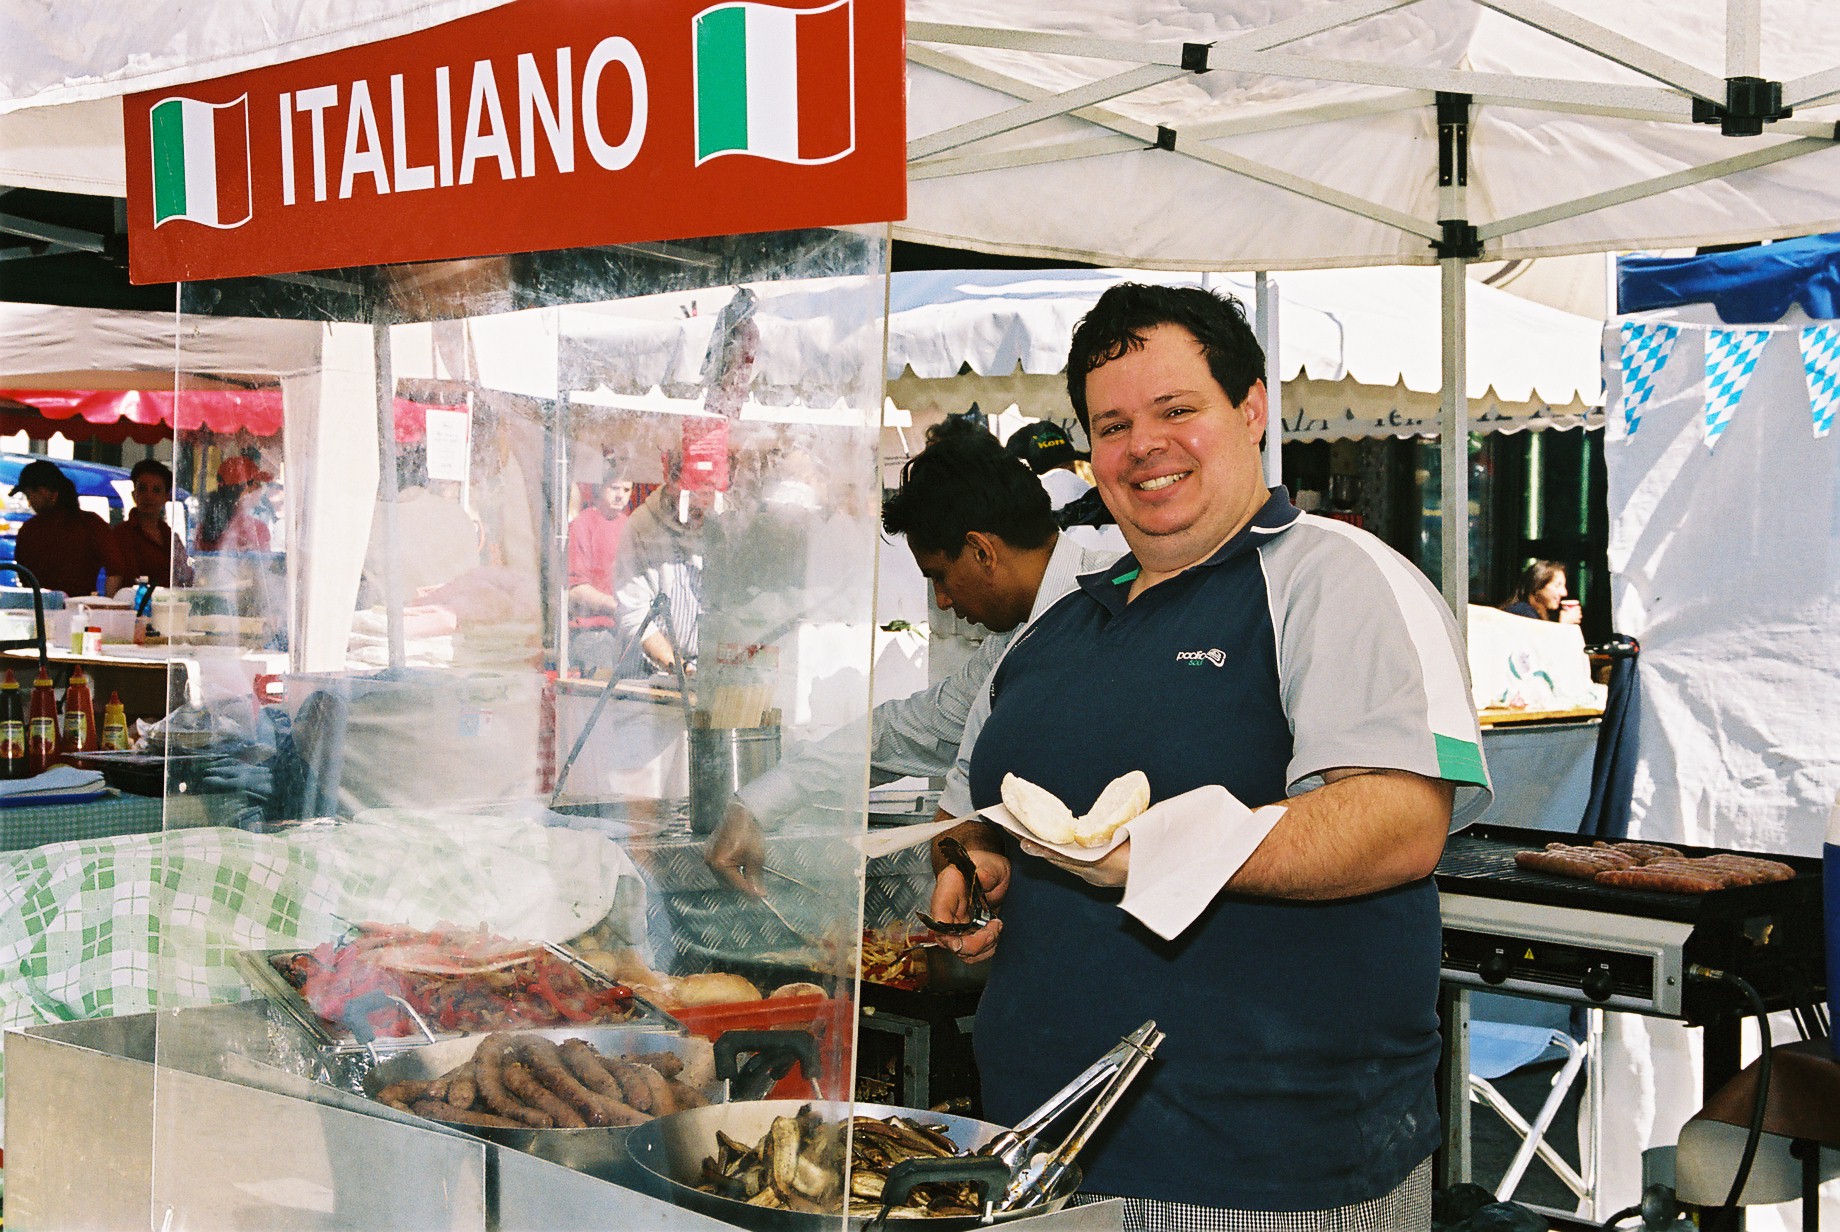 Man smiling at italiano stall